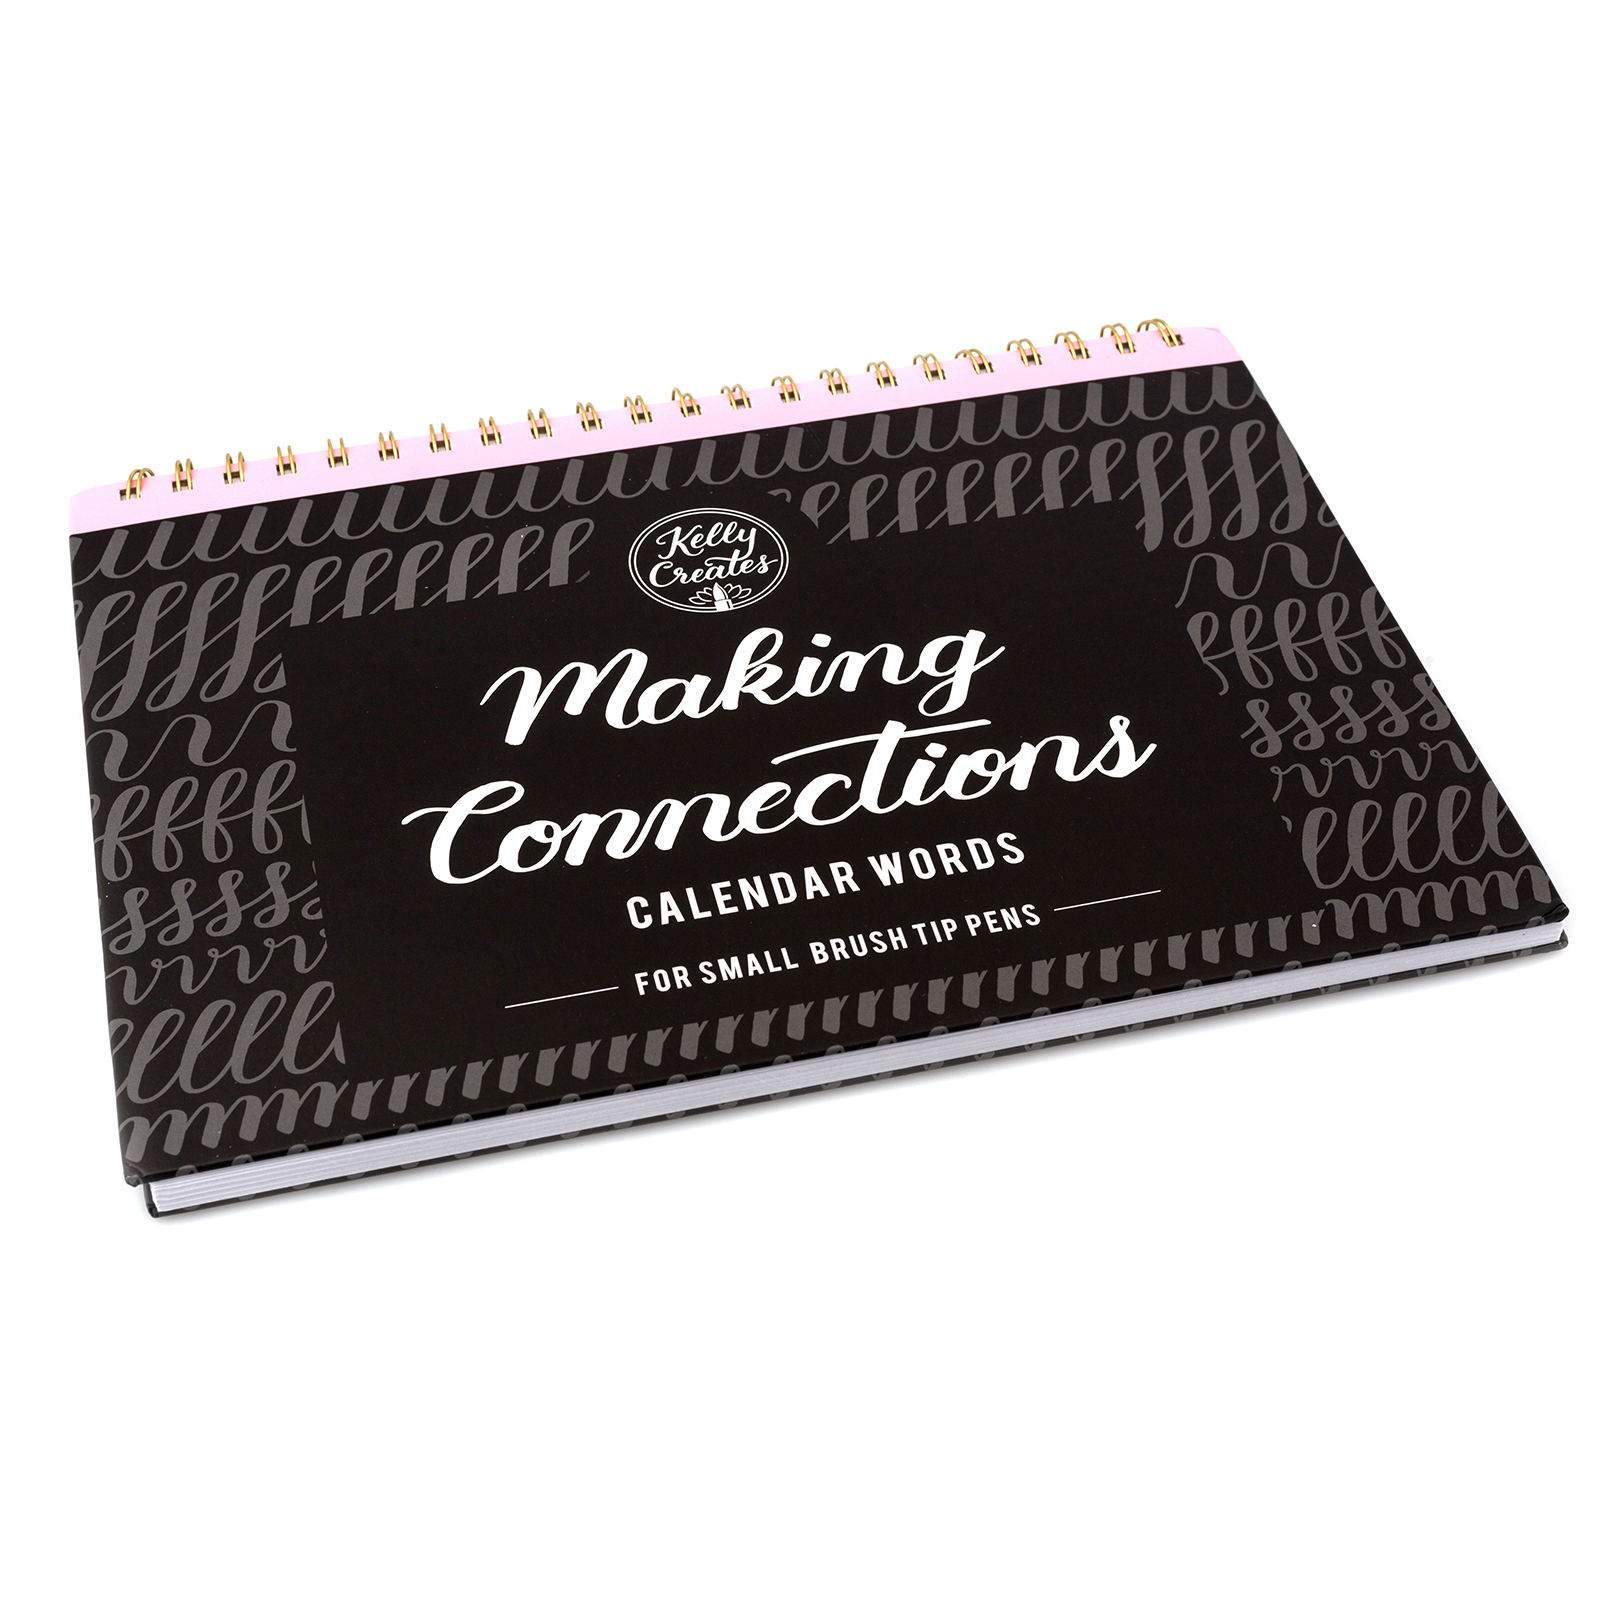 Kelly Creates • Small brush connections workbook calendar